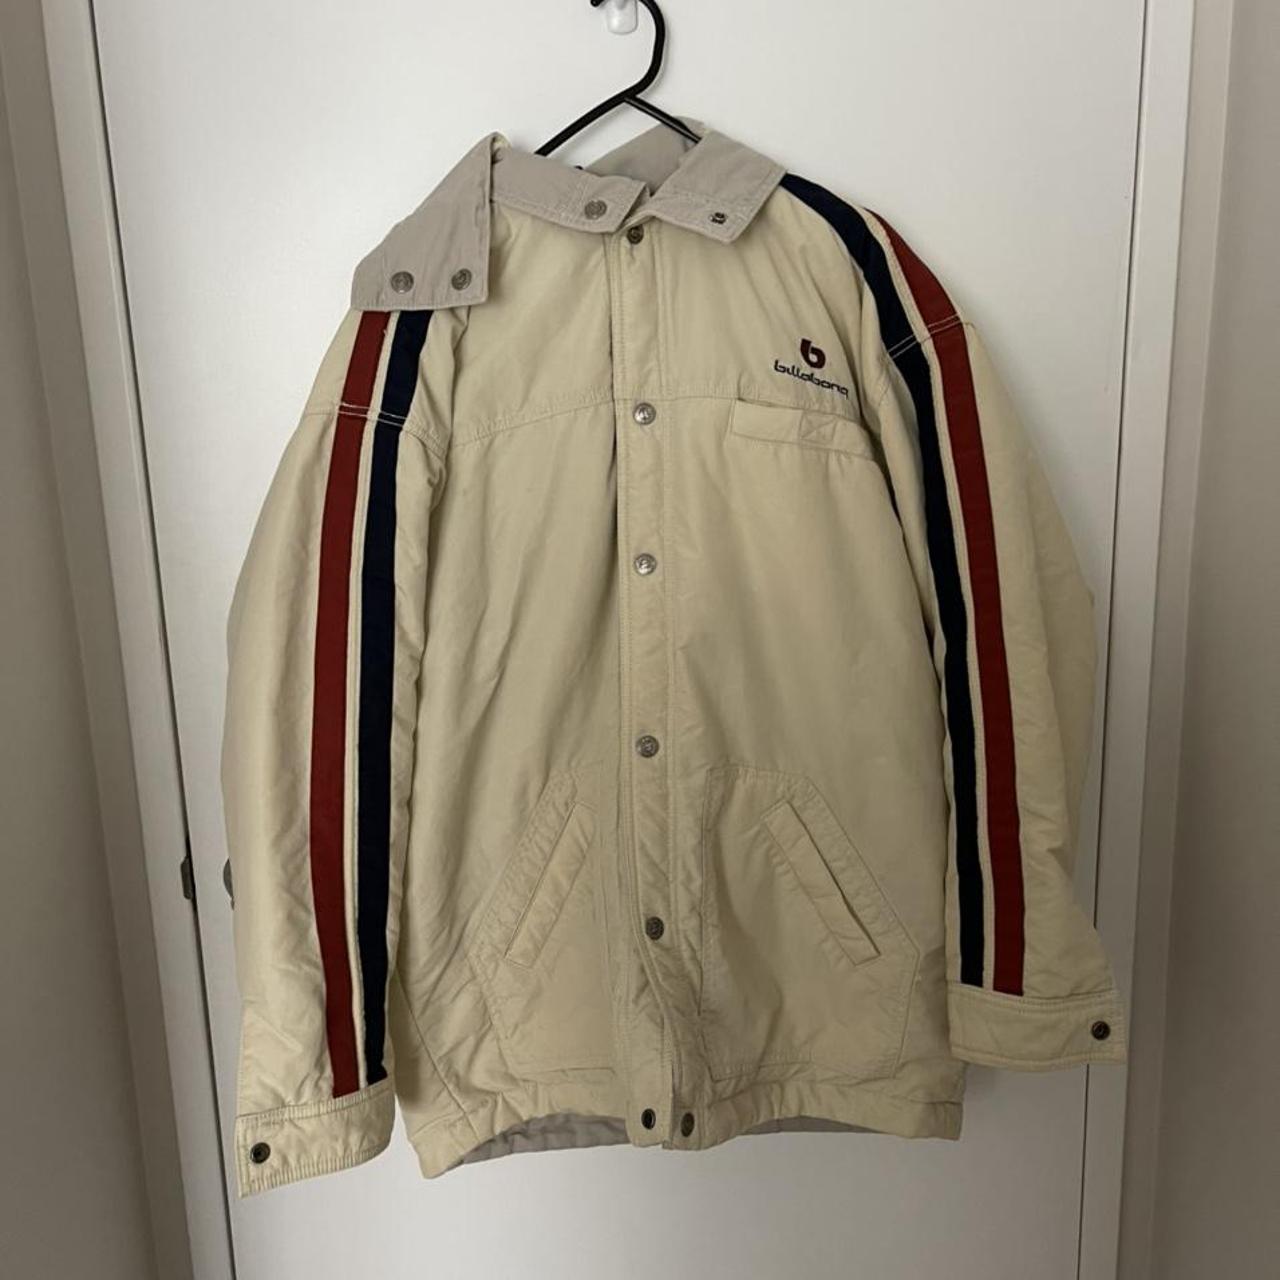 Vintage reversible billabong jacket size XL good... - Depop